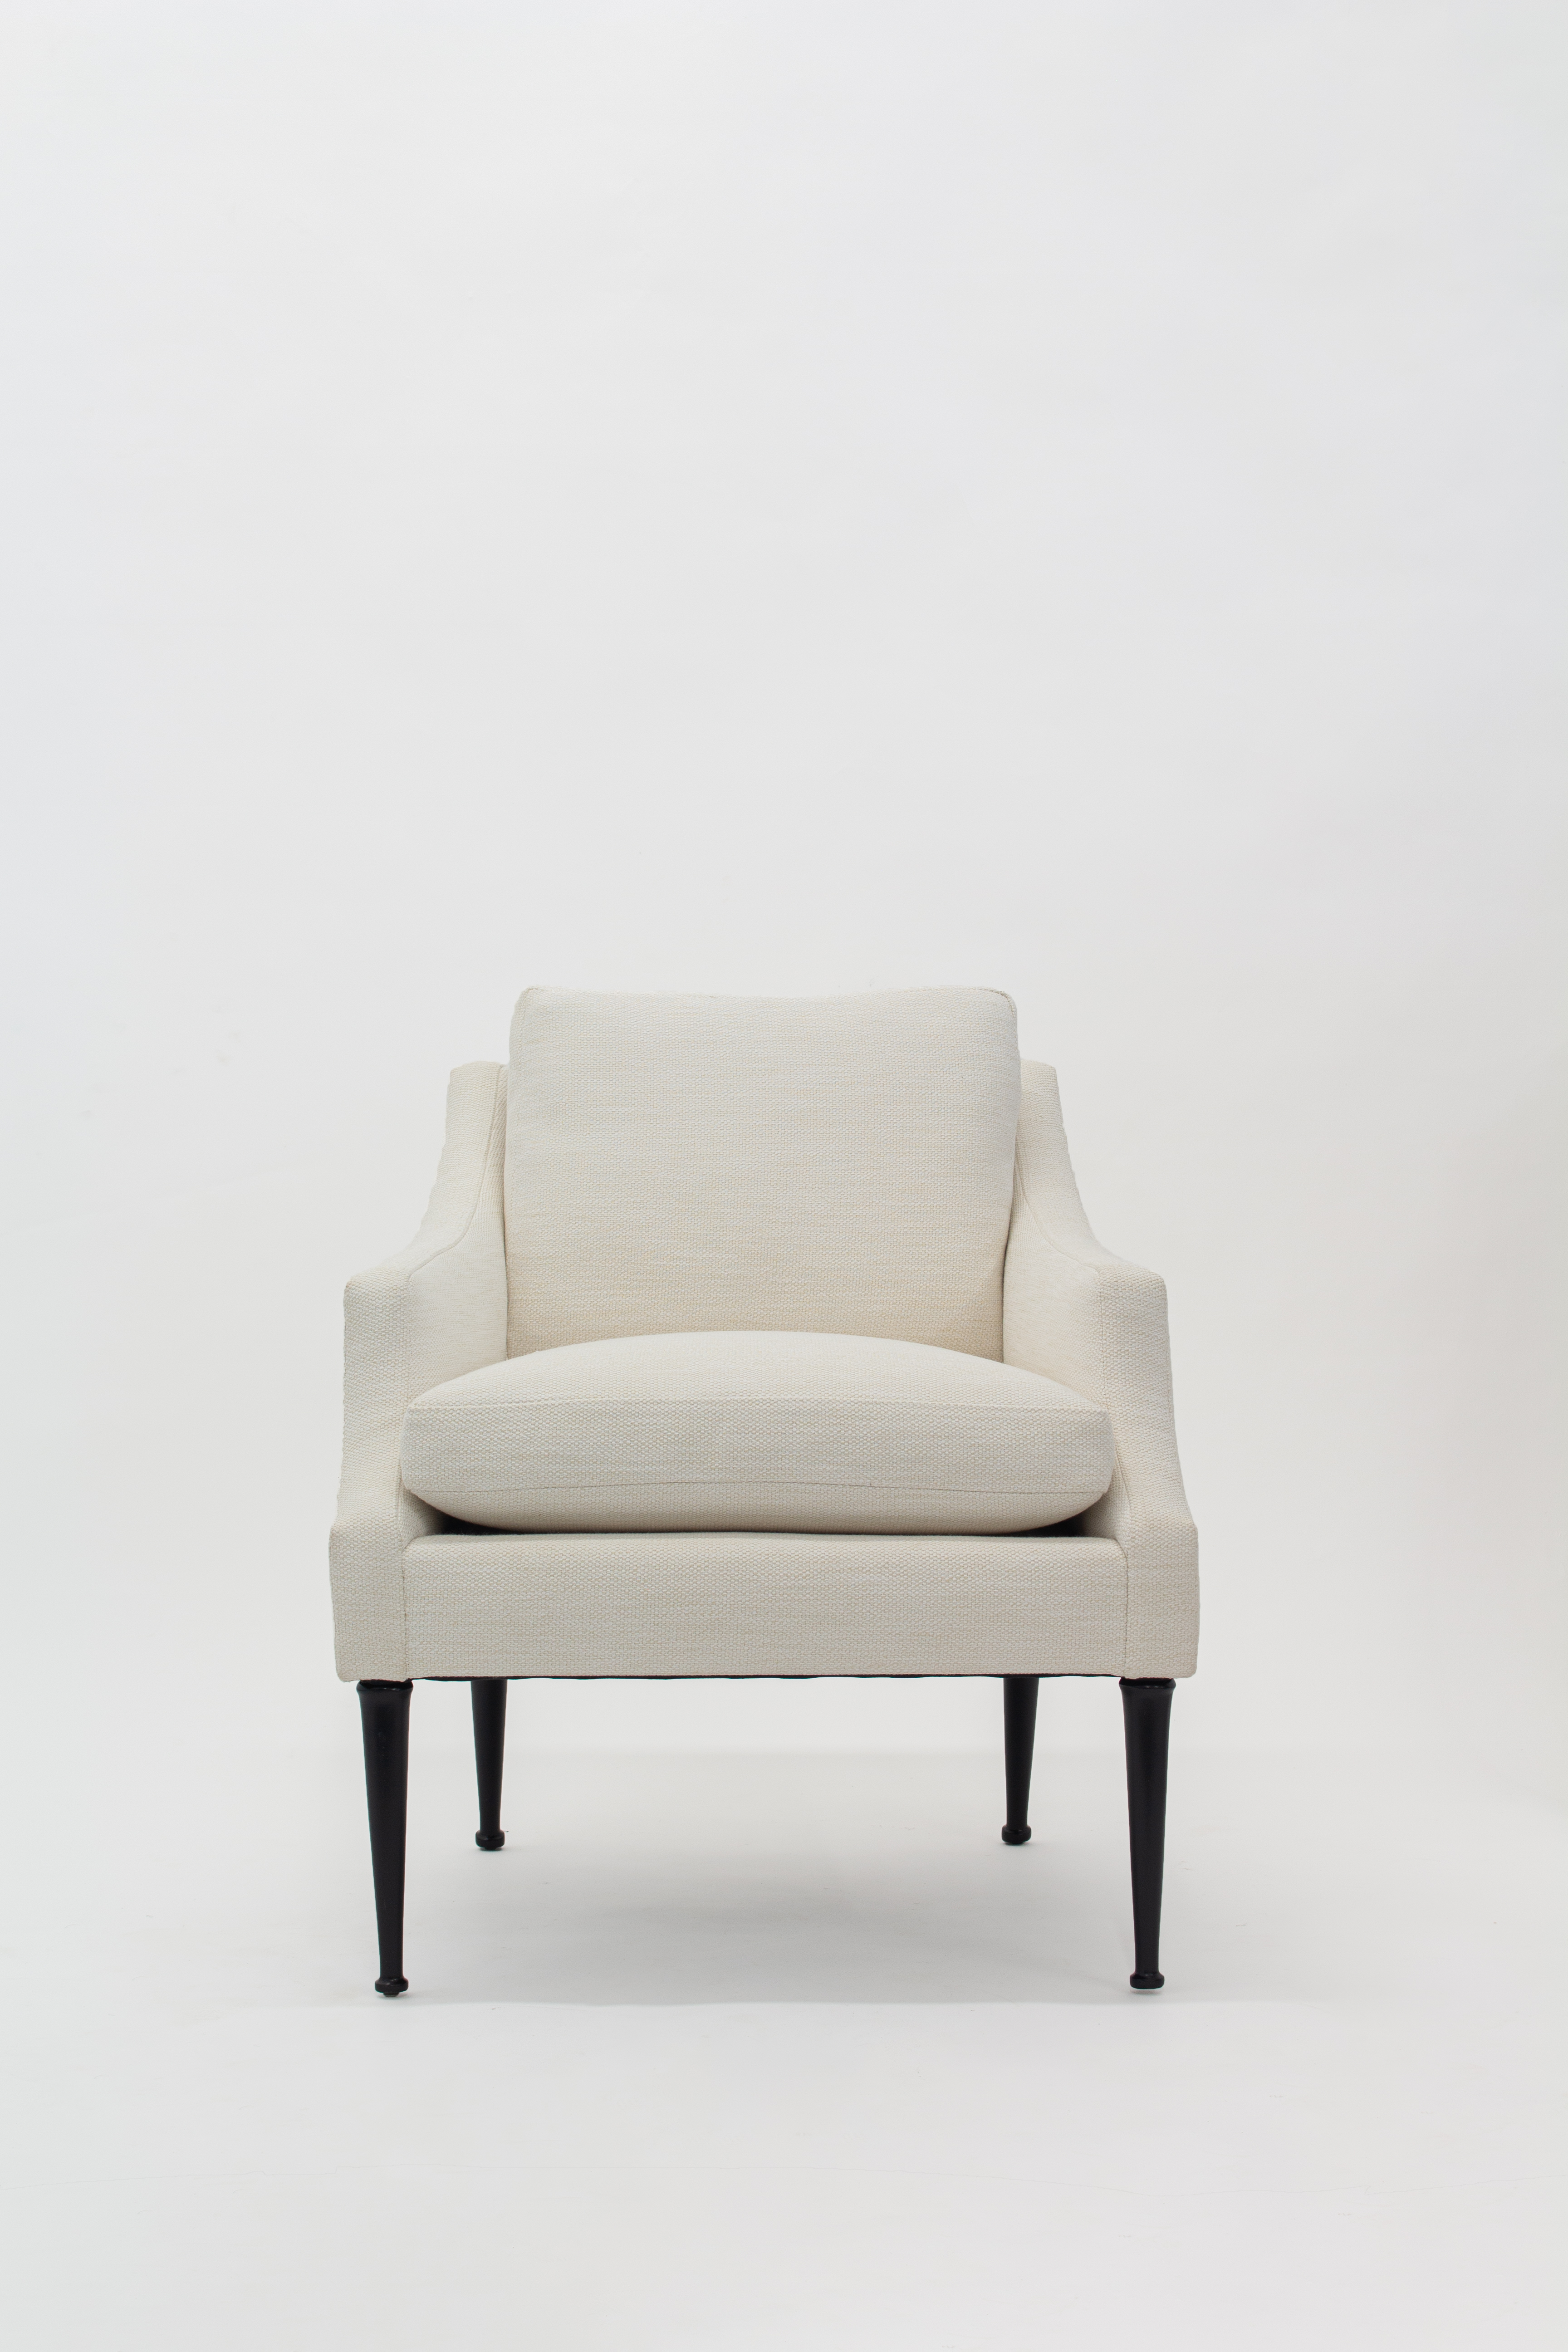 Pair Mid Century Modern Arm Chairs by Karpen